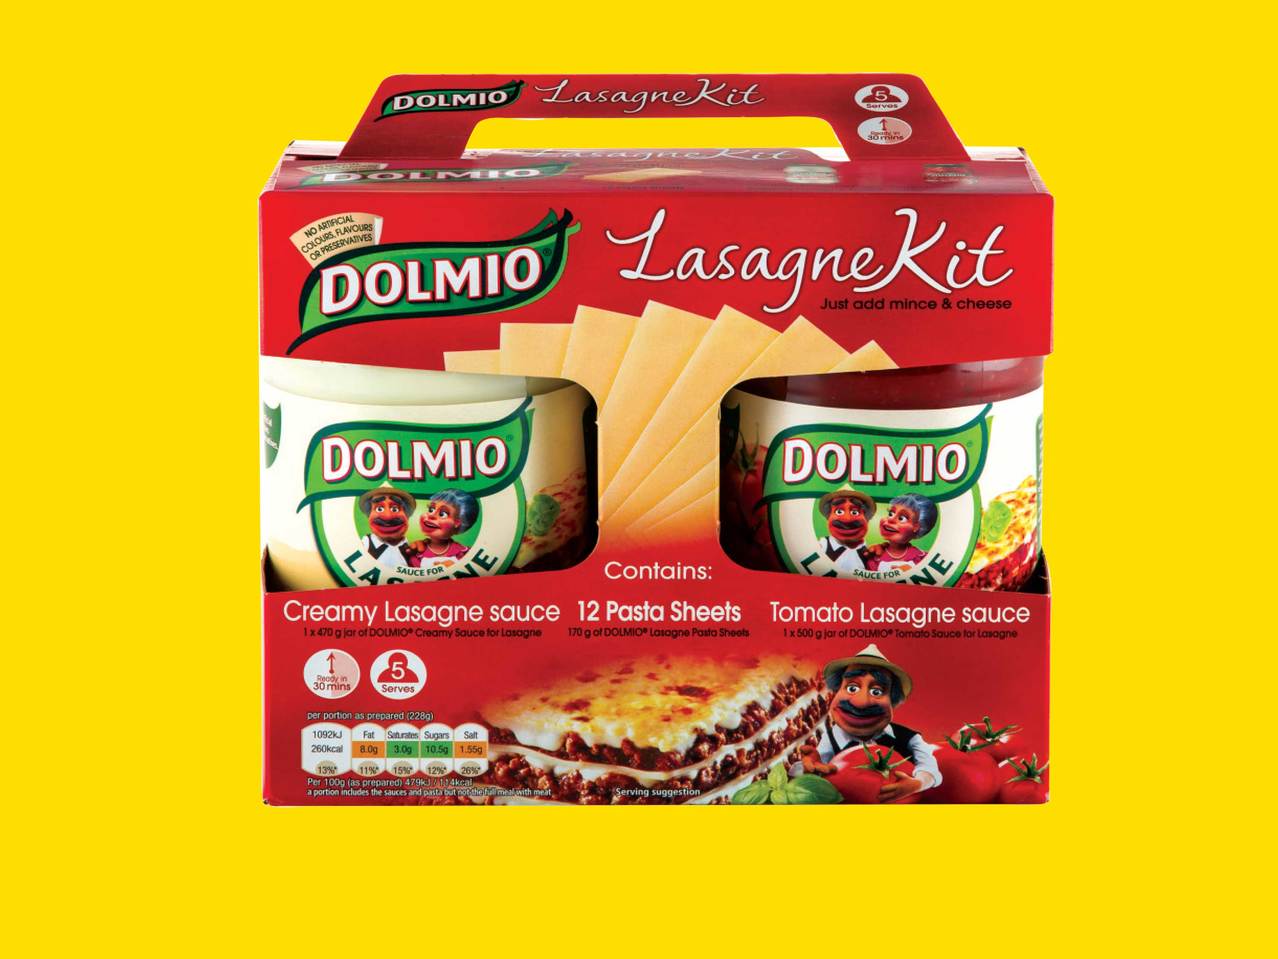 DOLMIO(R) Lasagne Kit